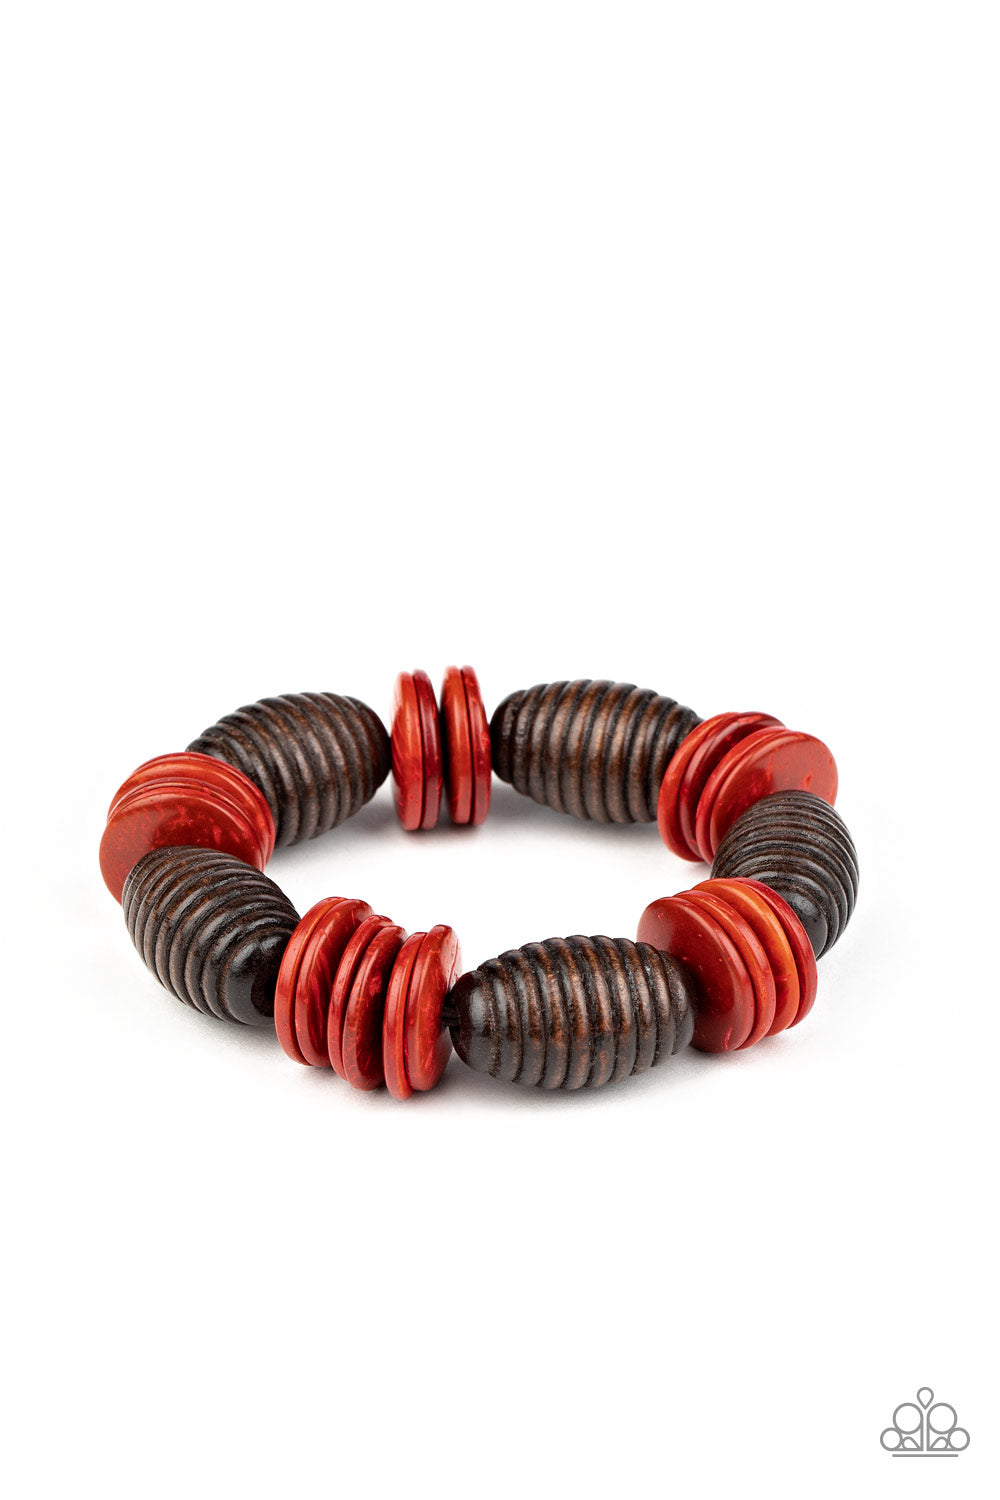 Caribbean Castaway Red Wooden Bracelet - Paparazzi Accessories